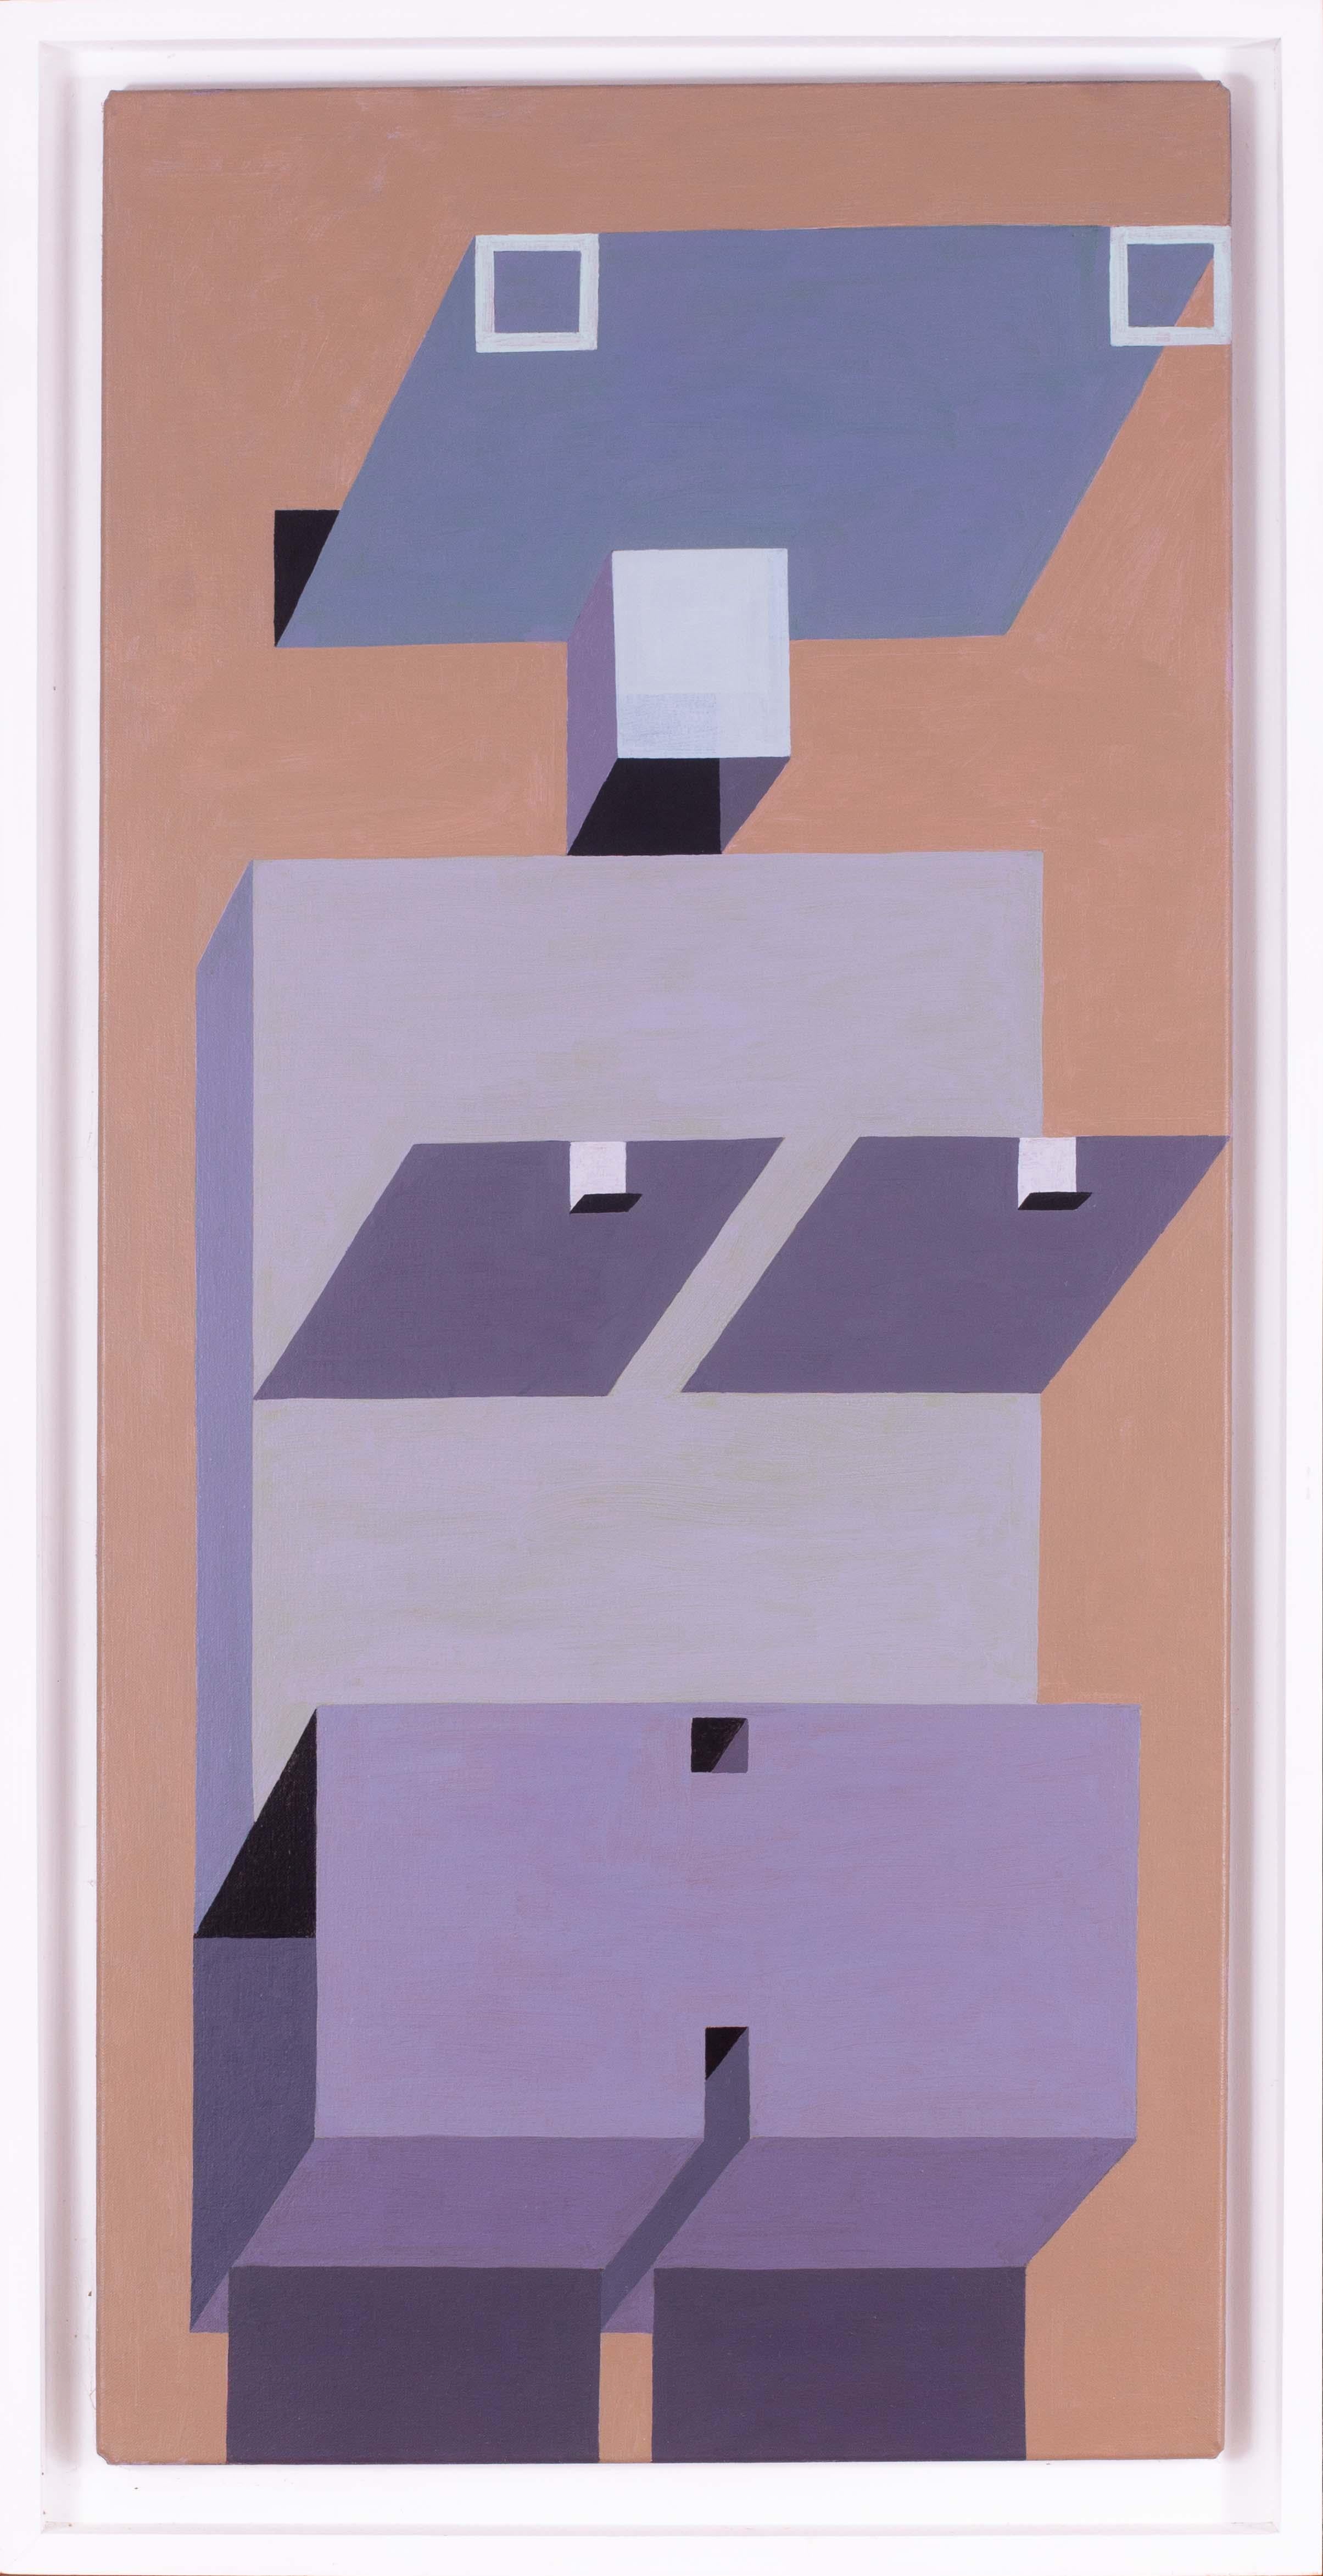 Ron Sims (Brite, 1944 - 2014)
Ghost
Öl auf Leinwand
48.1/4 x 22.5/8 in. (122.5 x 57.5 cm.)
